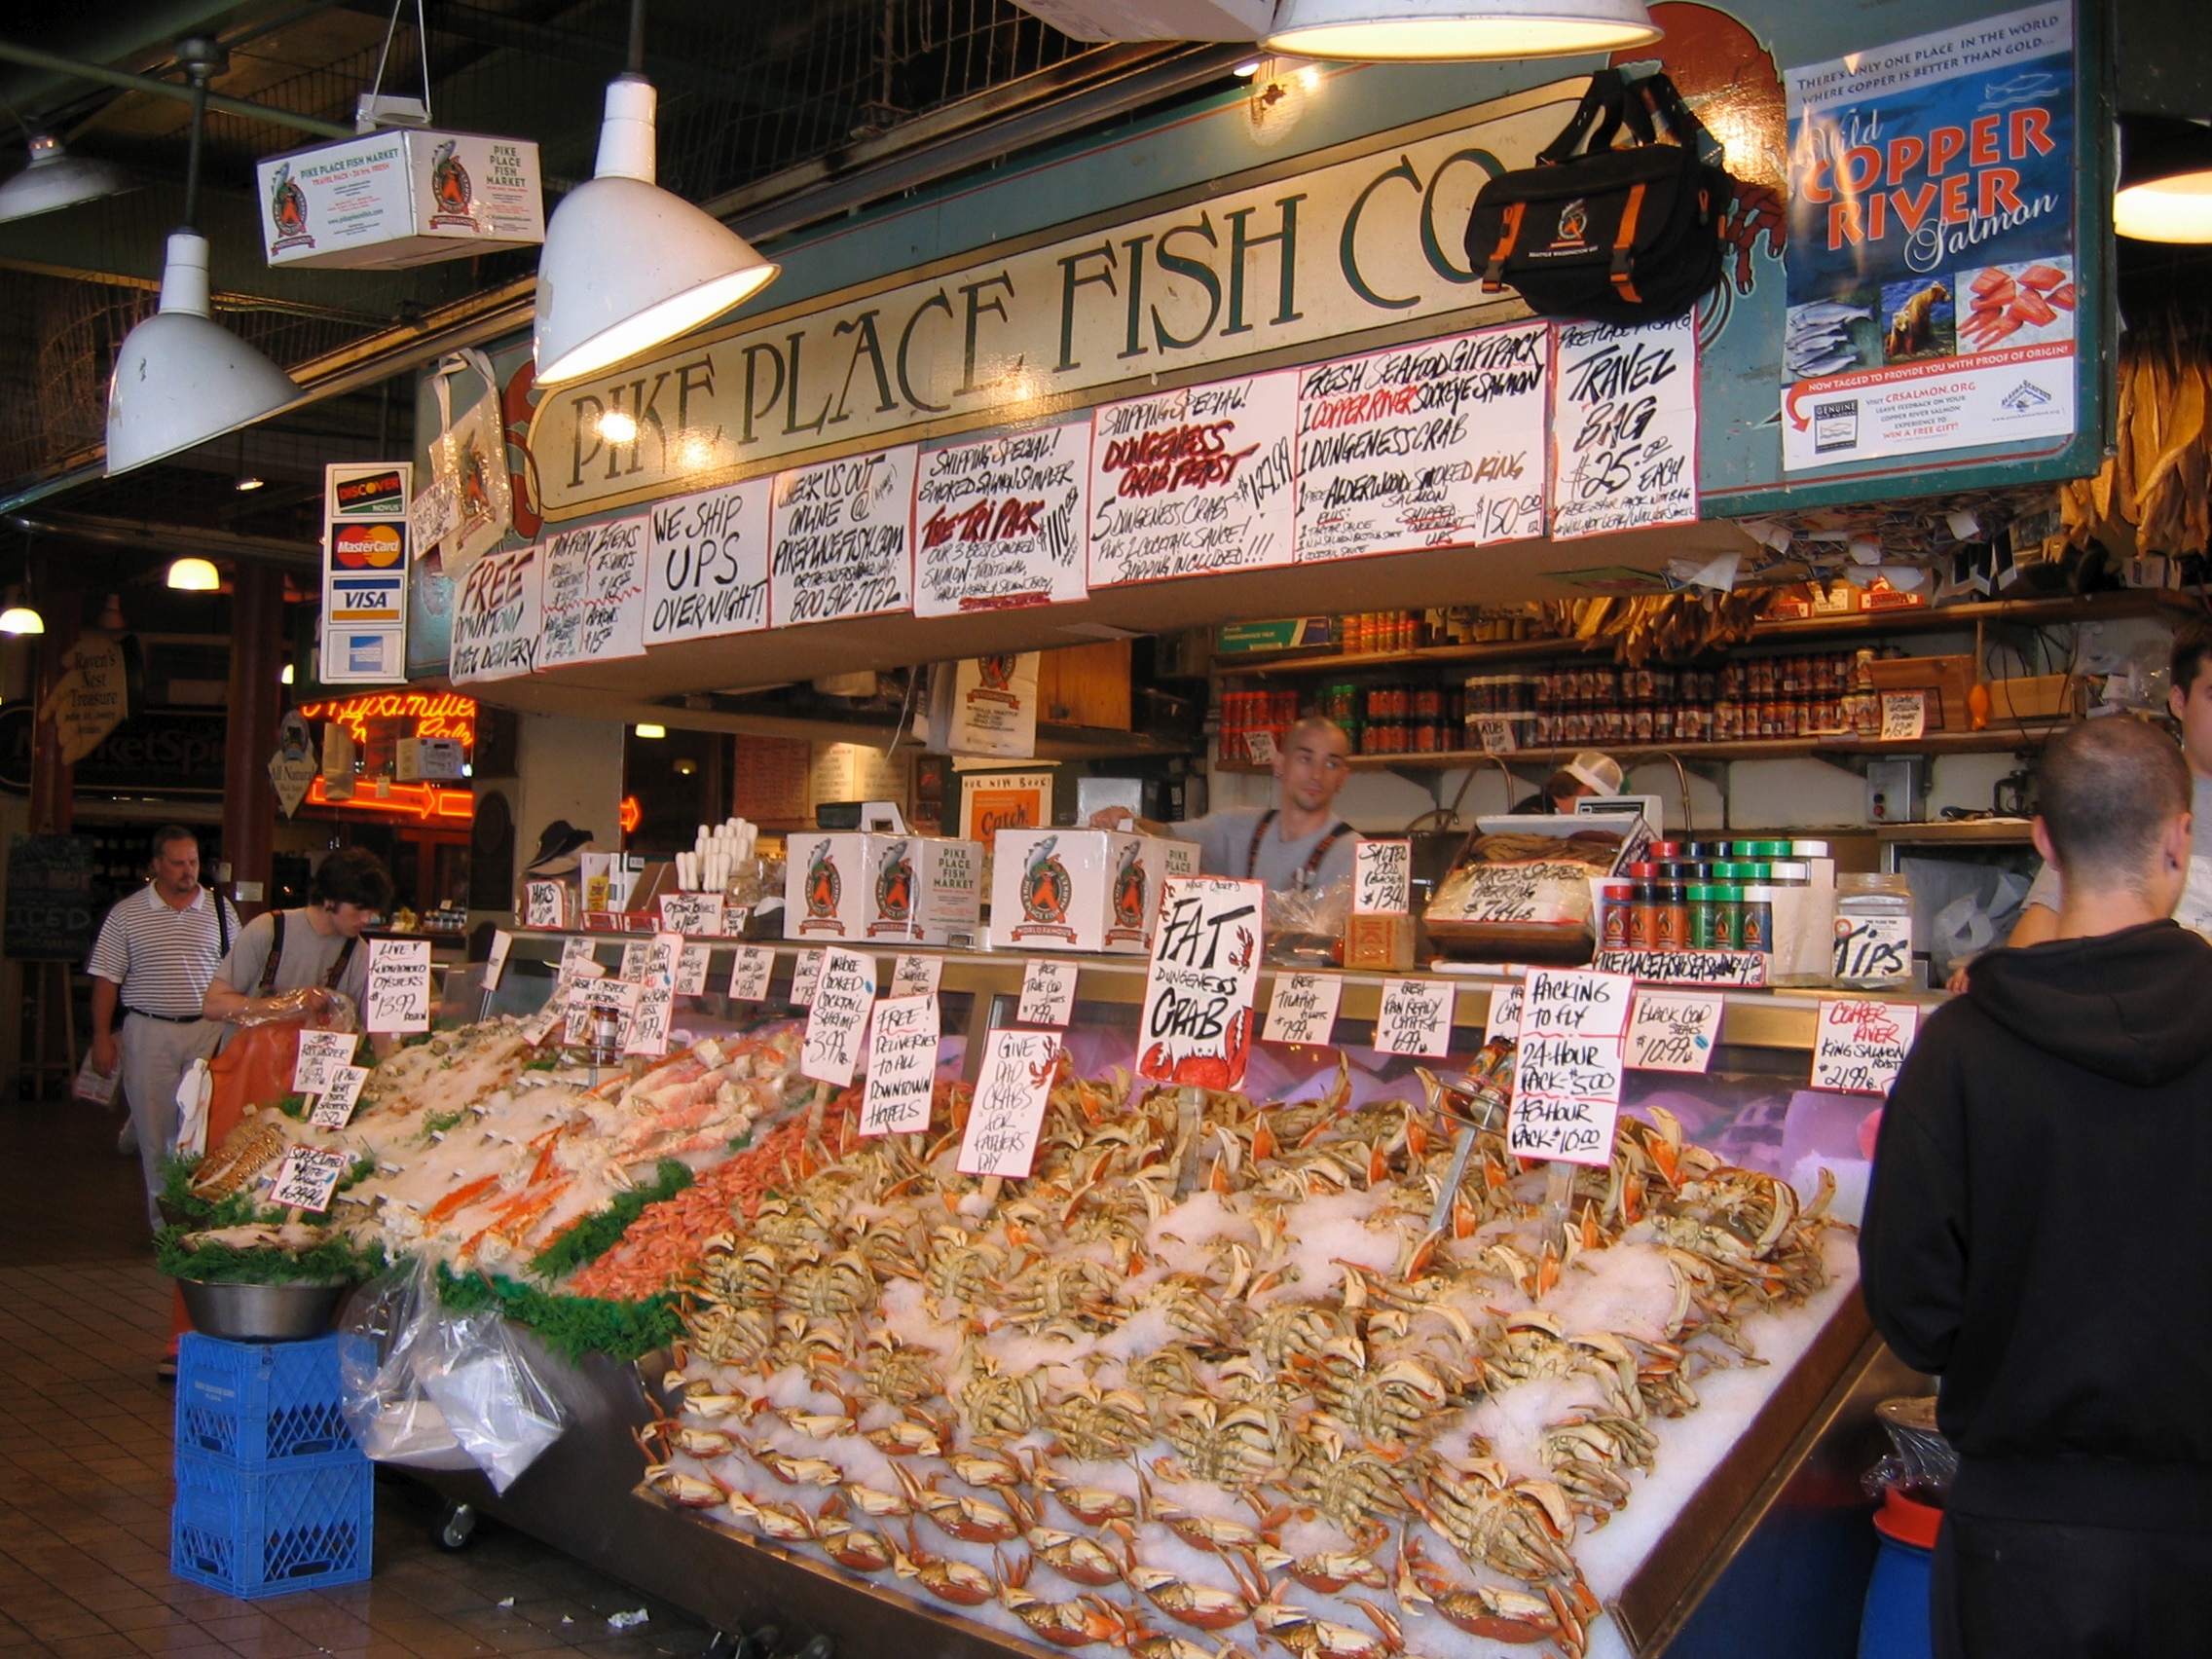 Pike Place Fish Market in Seattle, Washington